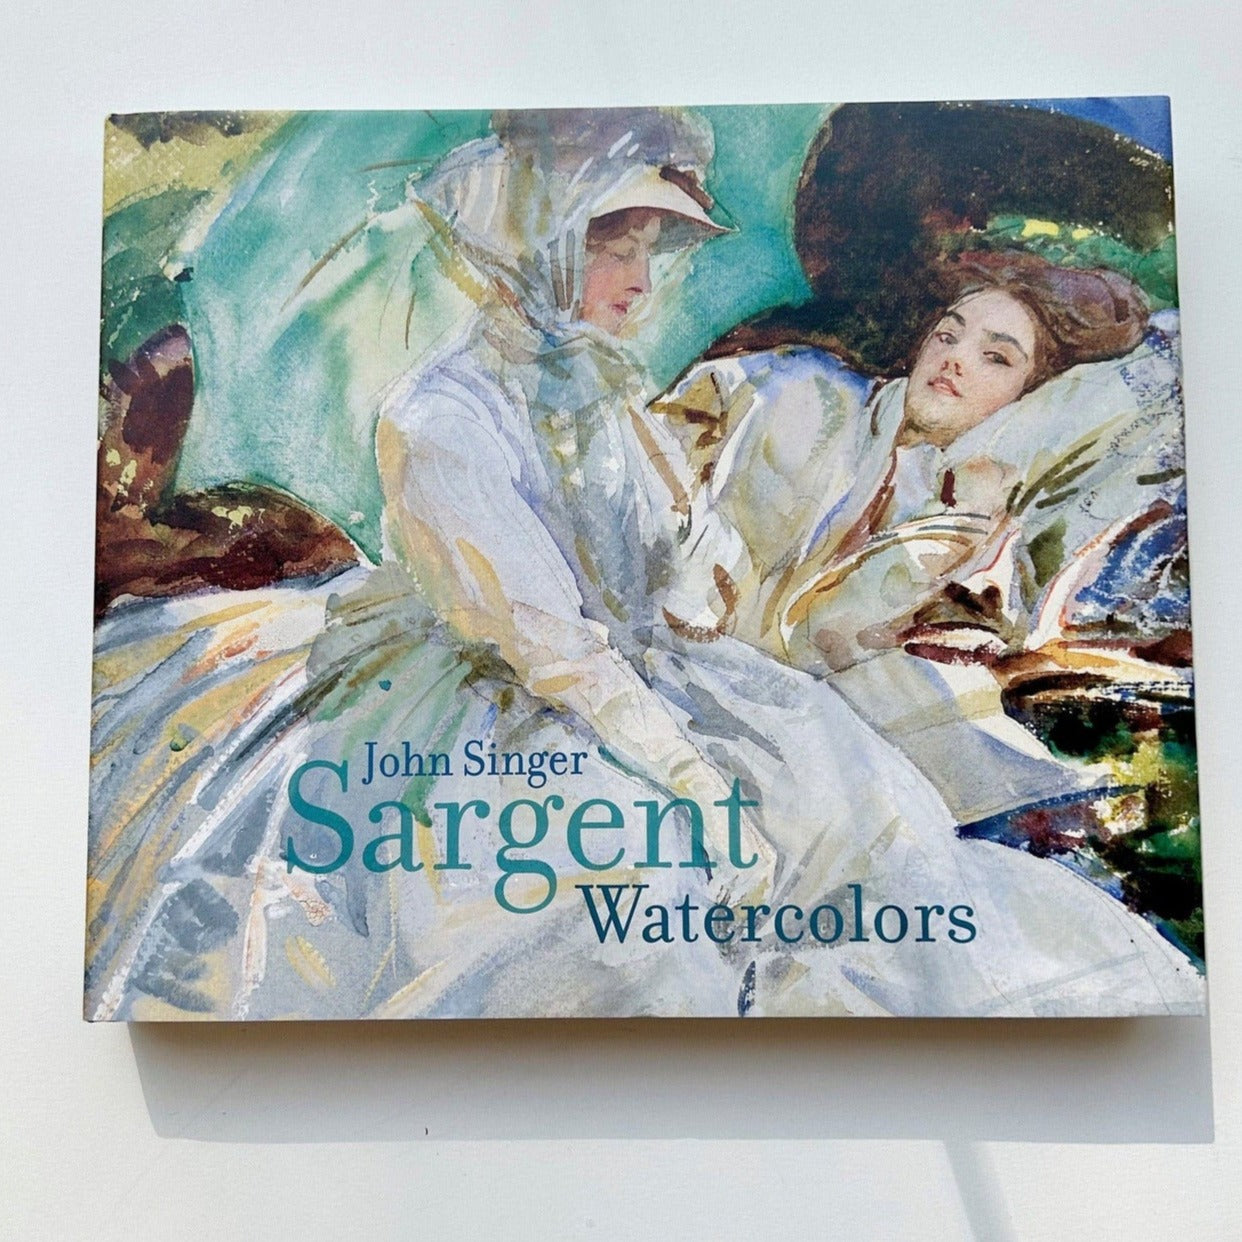 John Singer Sargent: Watercolors by Hirshler, Erica